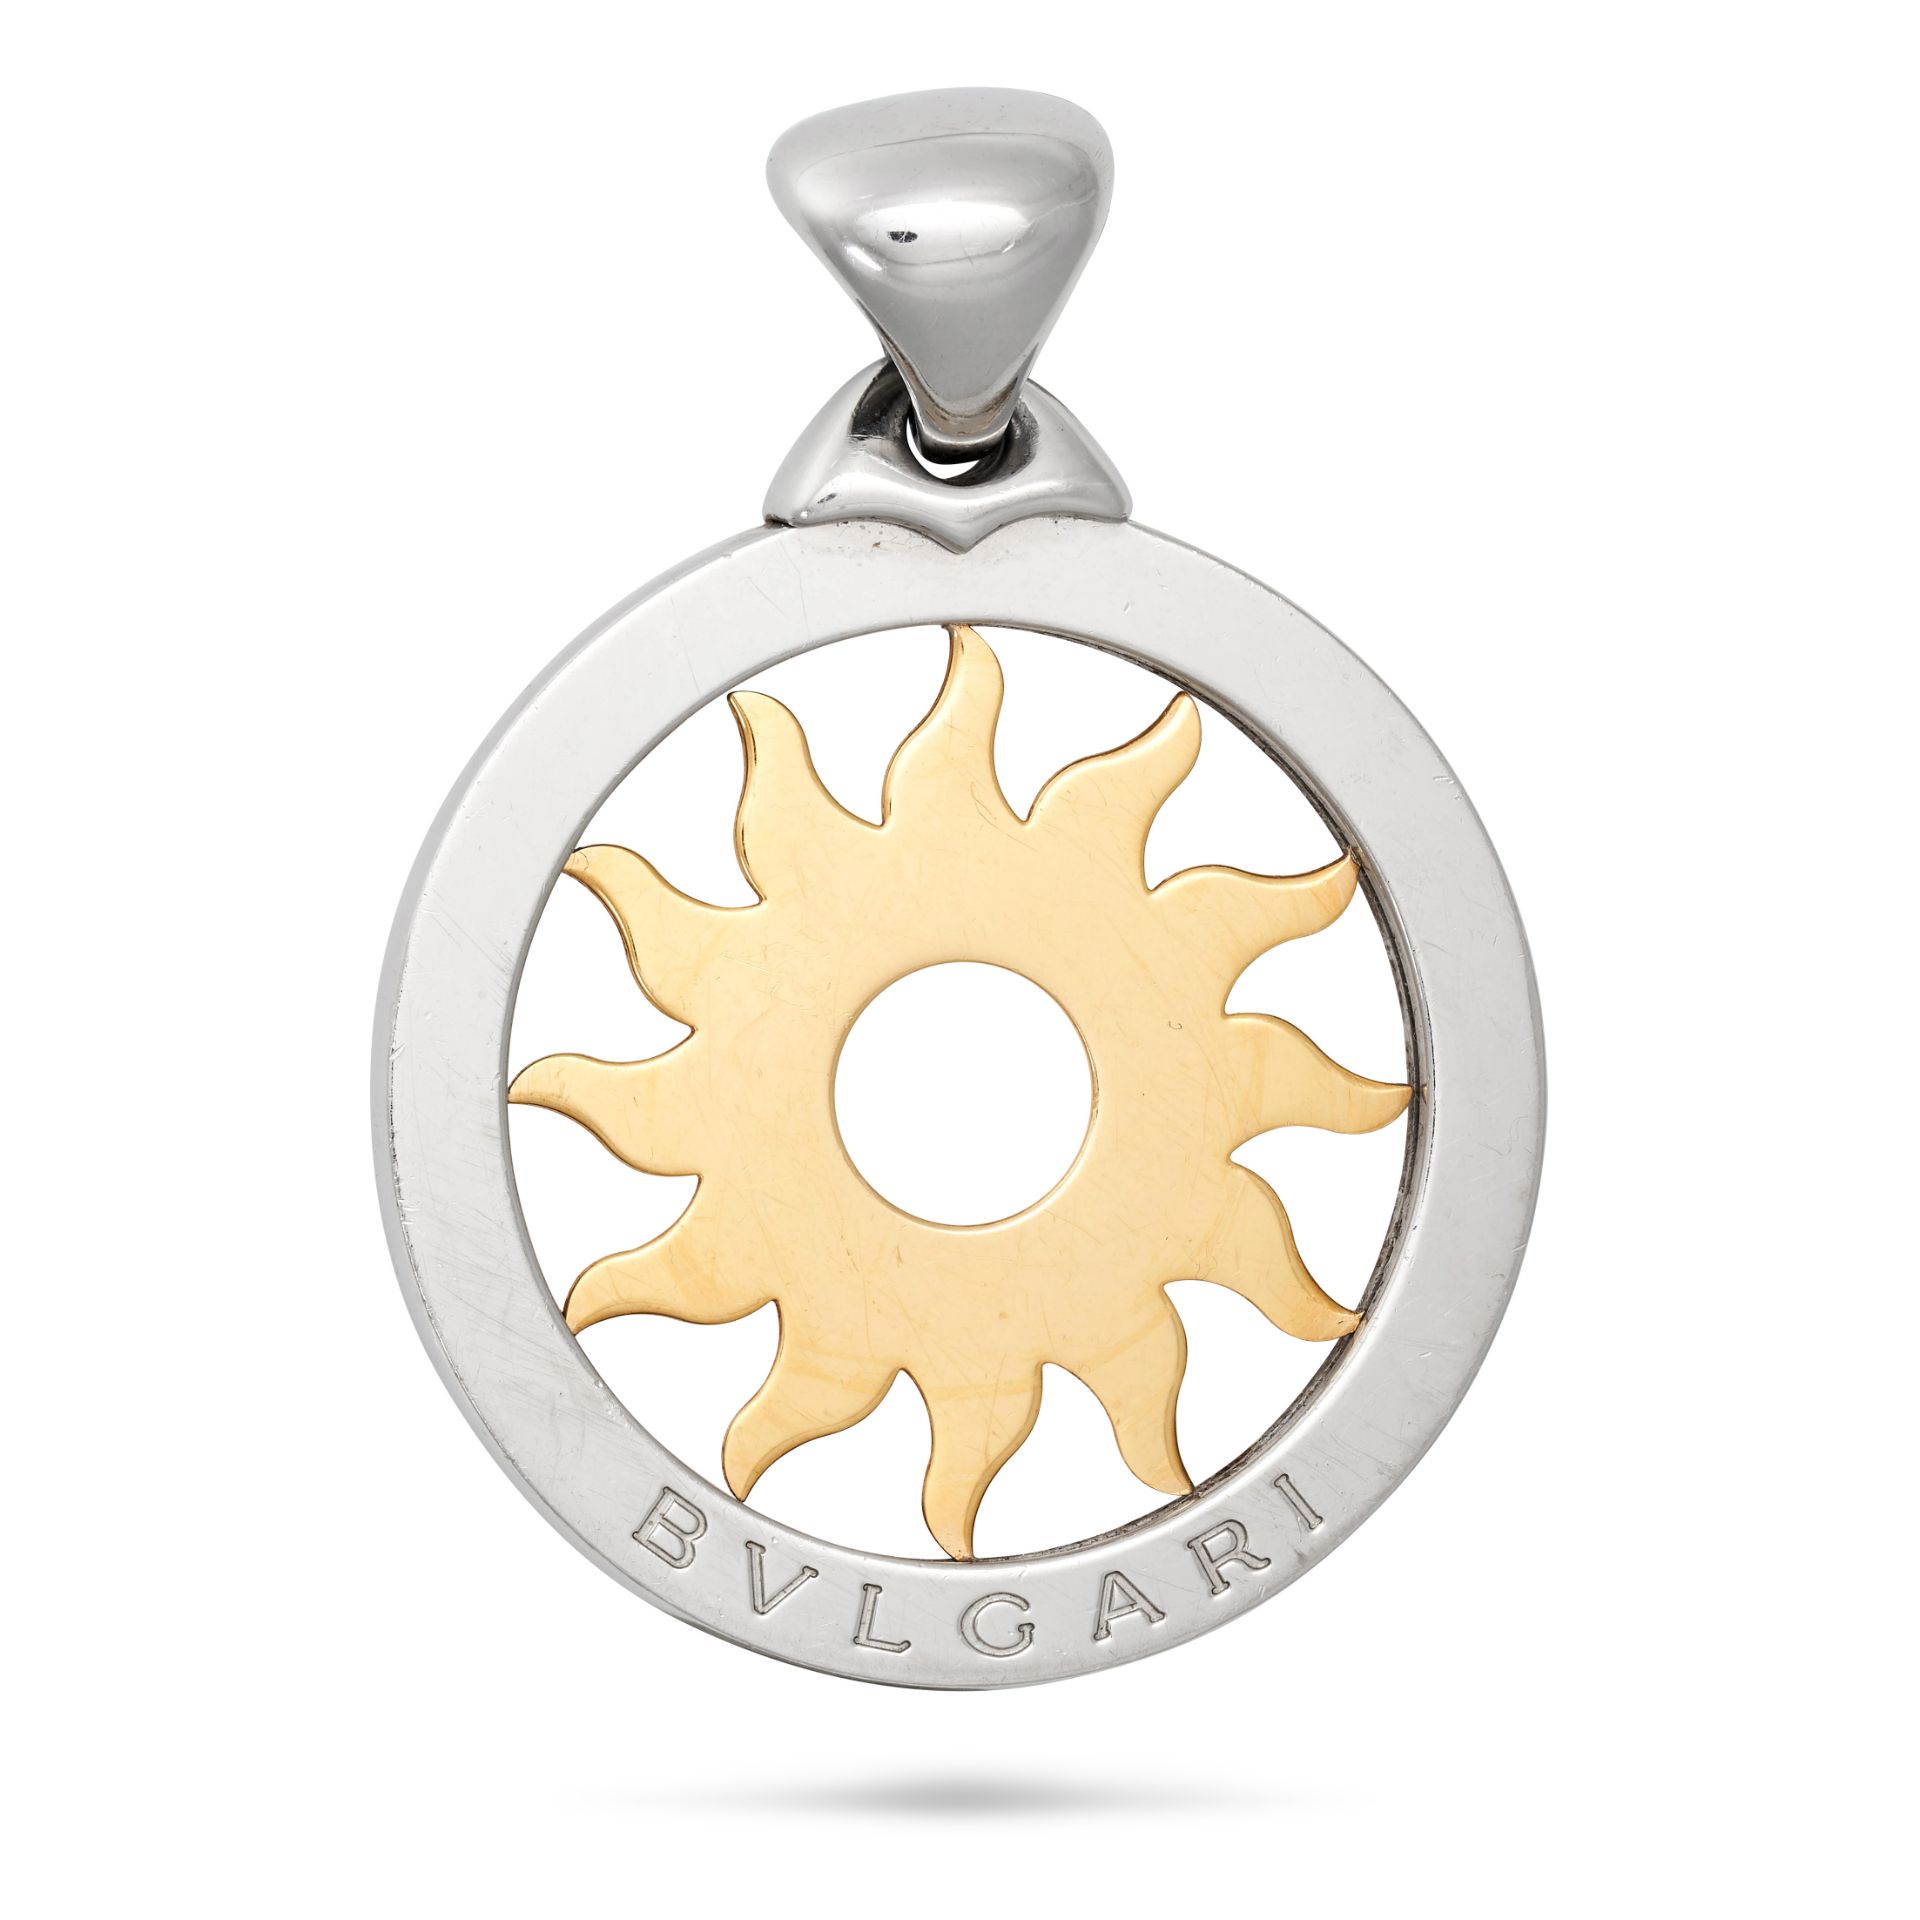 BULGARI, A TONDO SUN PENDANT in 18ct yellow gold and steel, the circular pendant designed as an o...